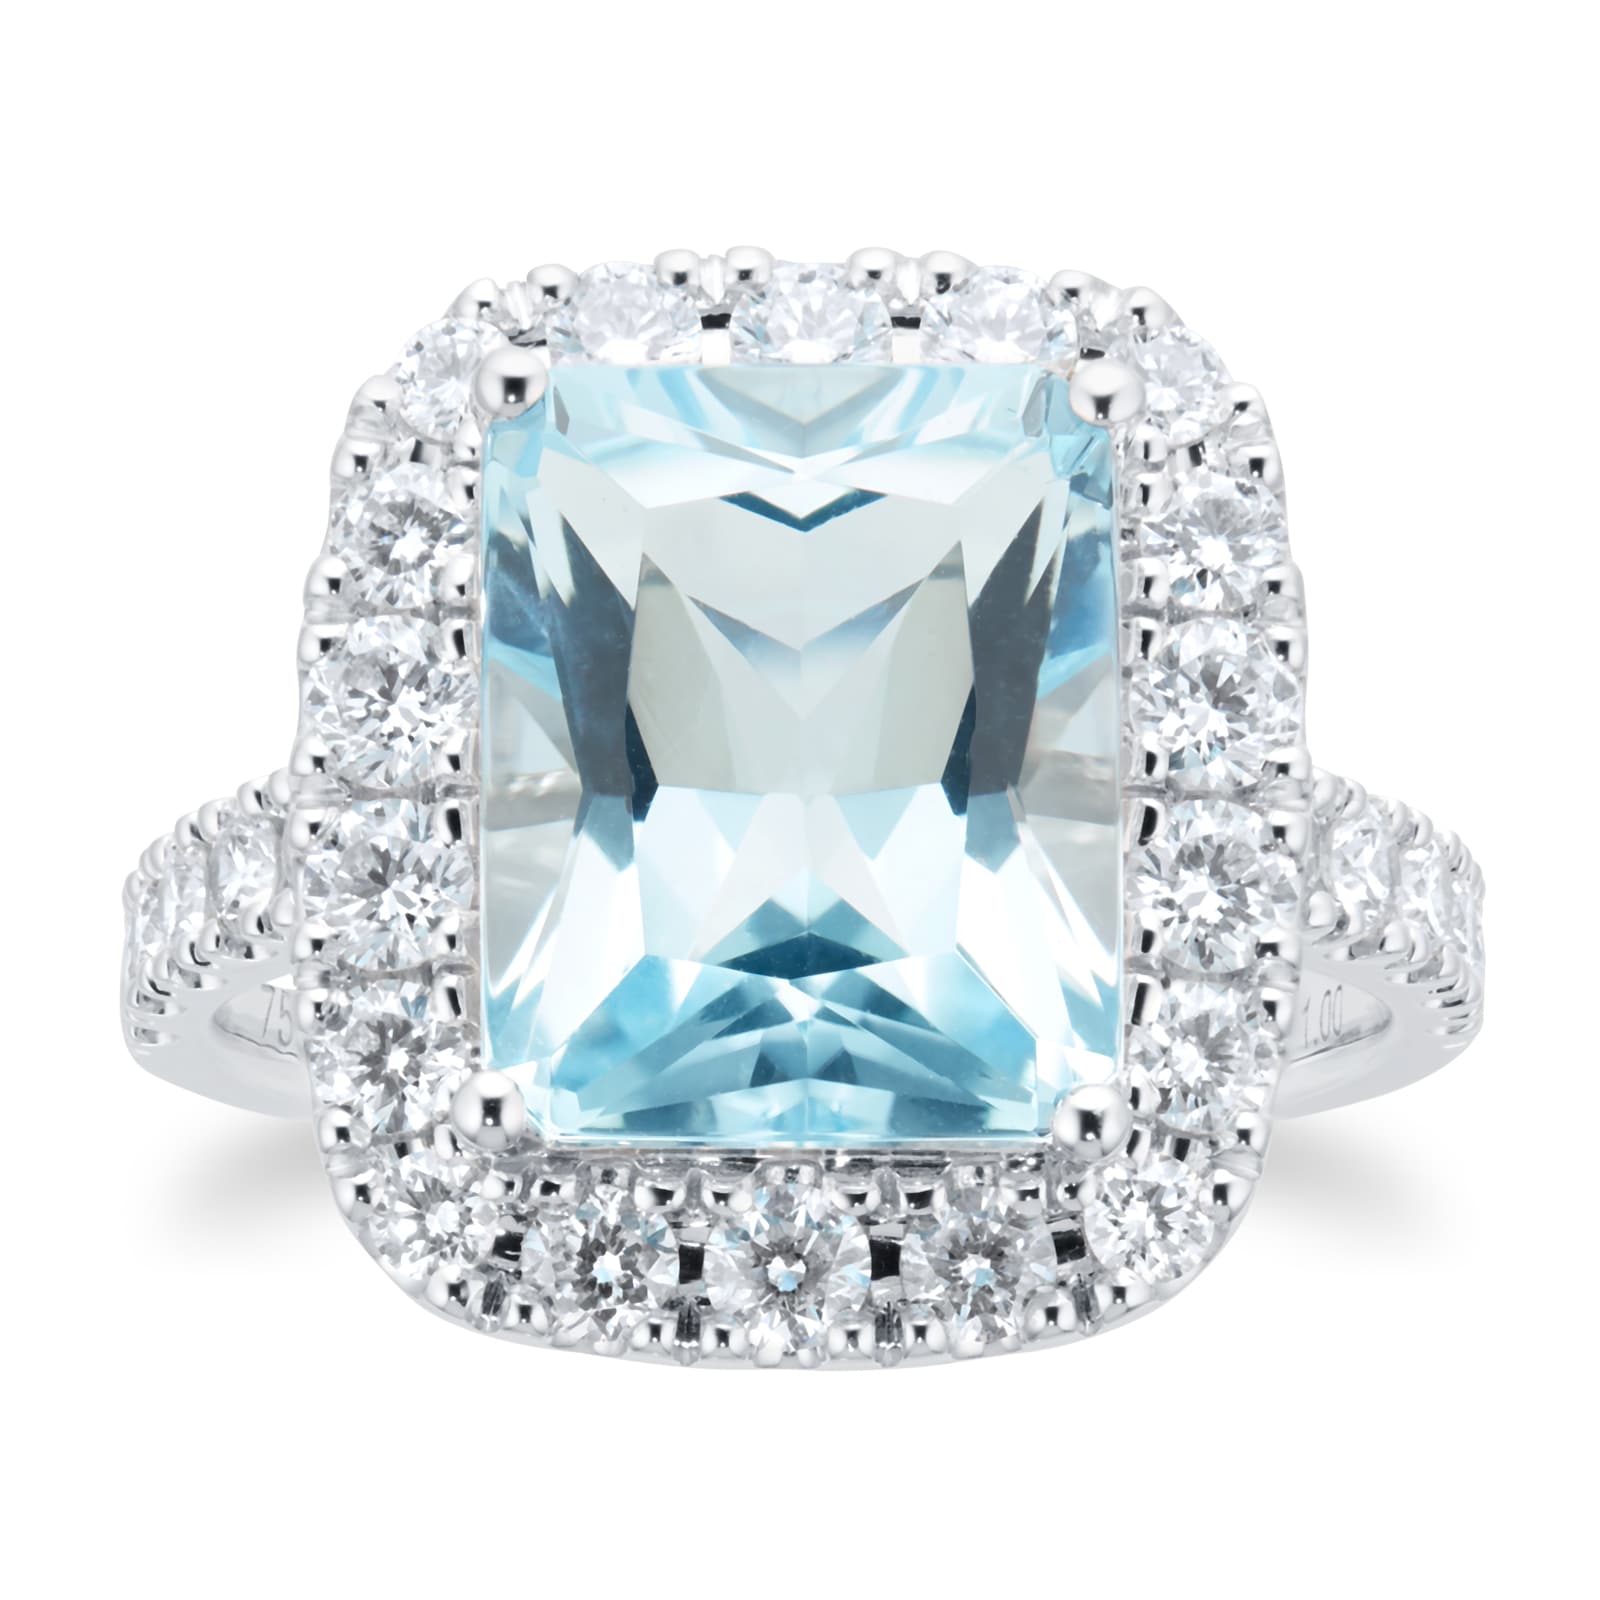 18ct White Gold 1.00cttw Diamond & Blue Topaz Ring - Ring Size N